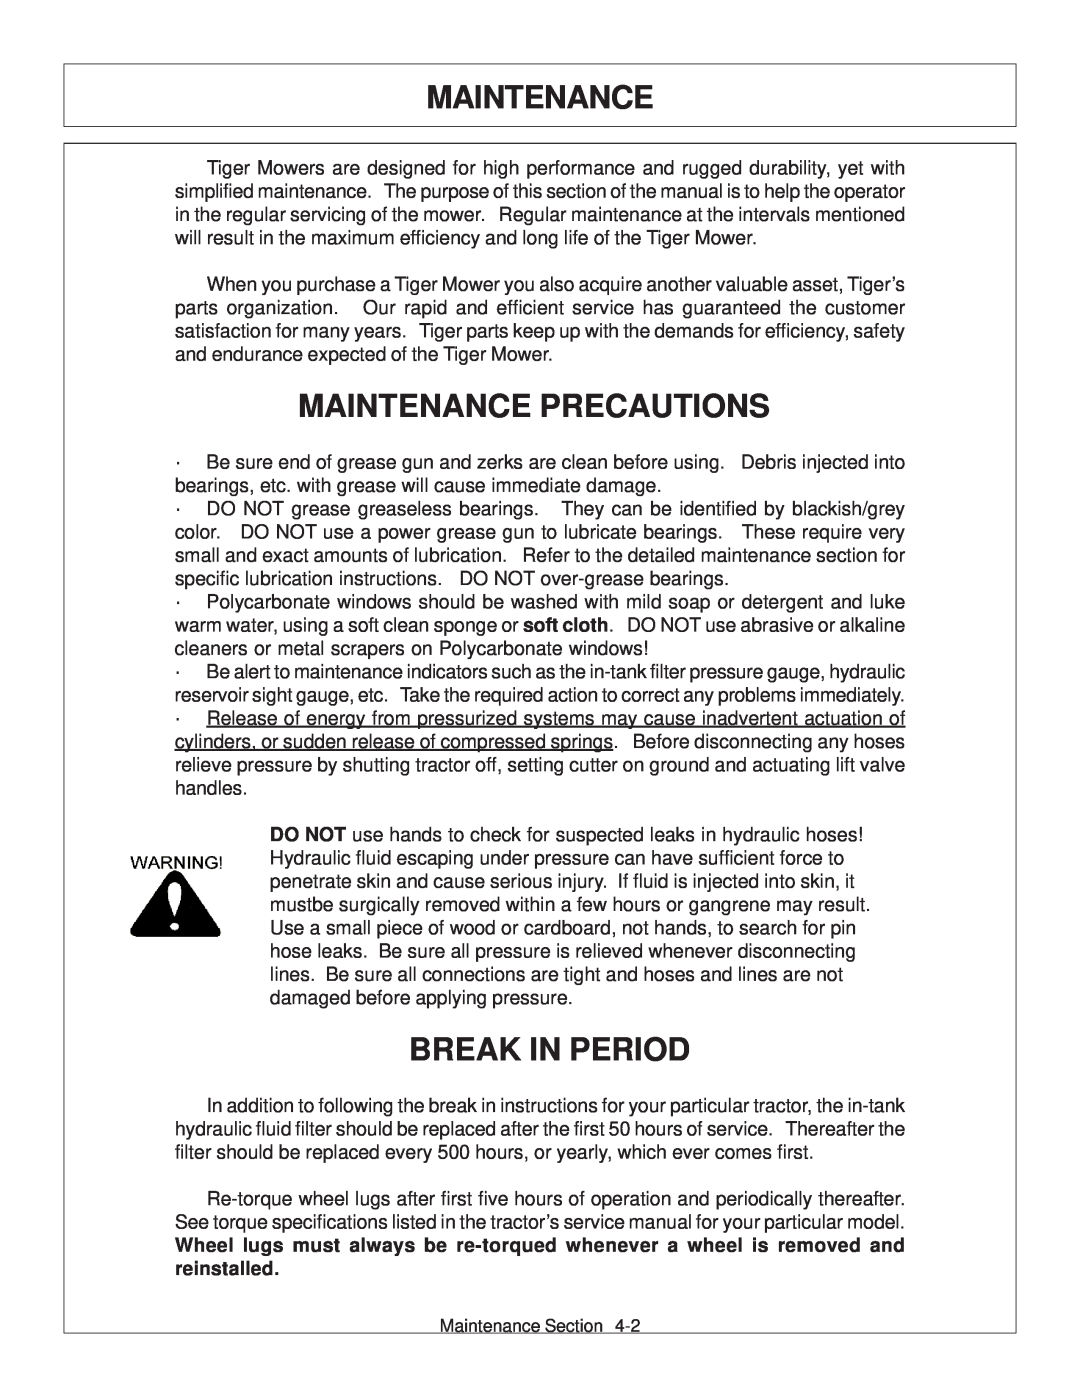 Tiger JD 62-6420 manual Maintenance Precautions, Break In Period 